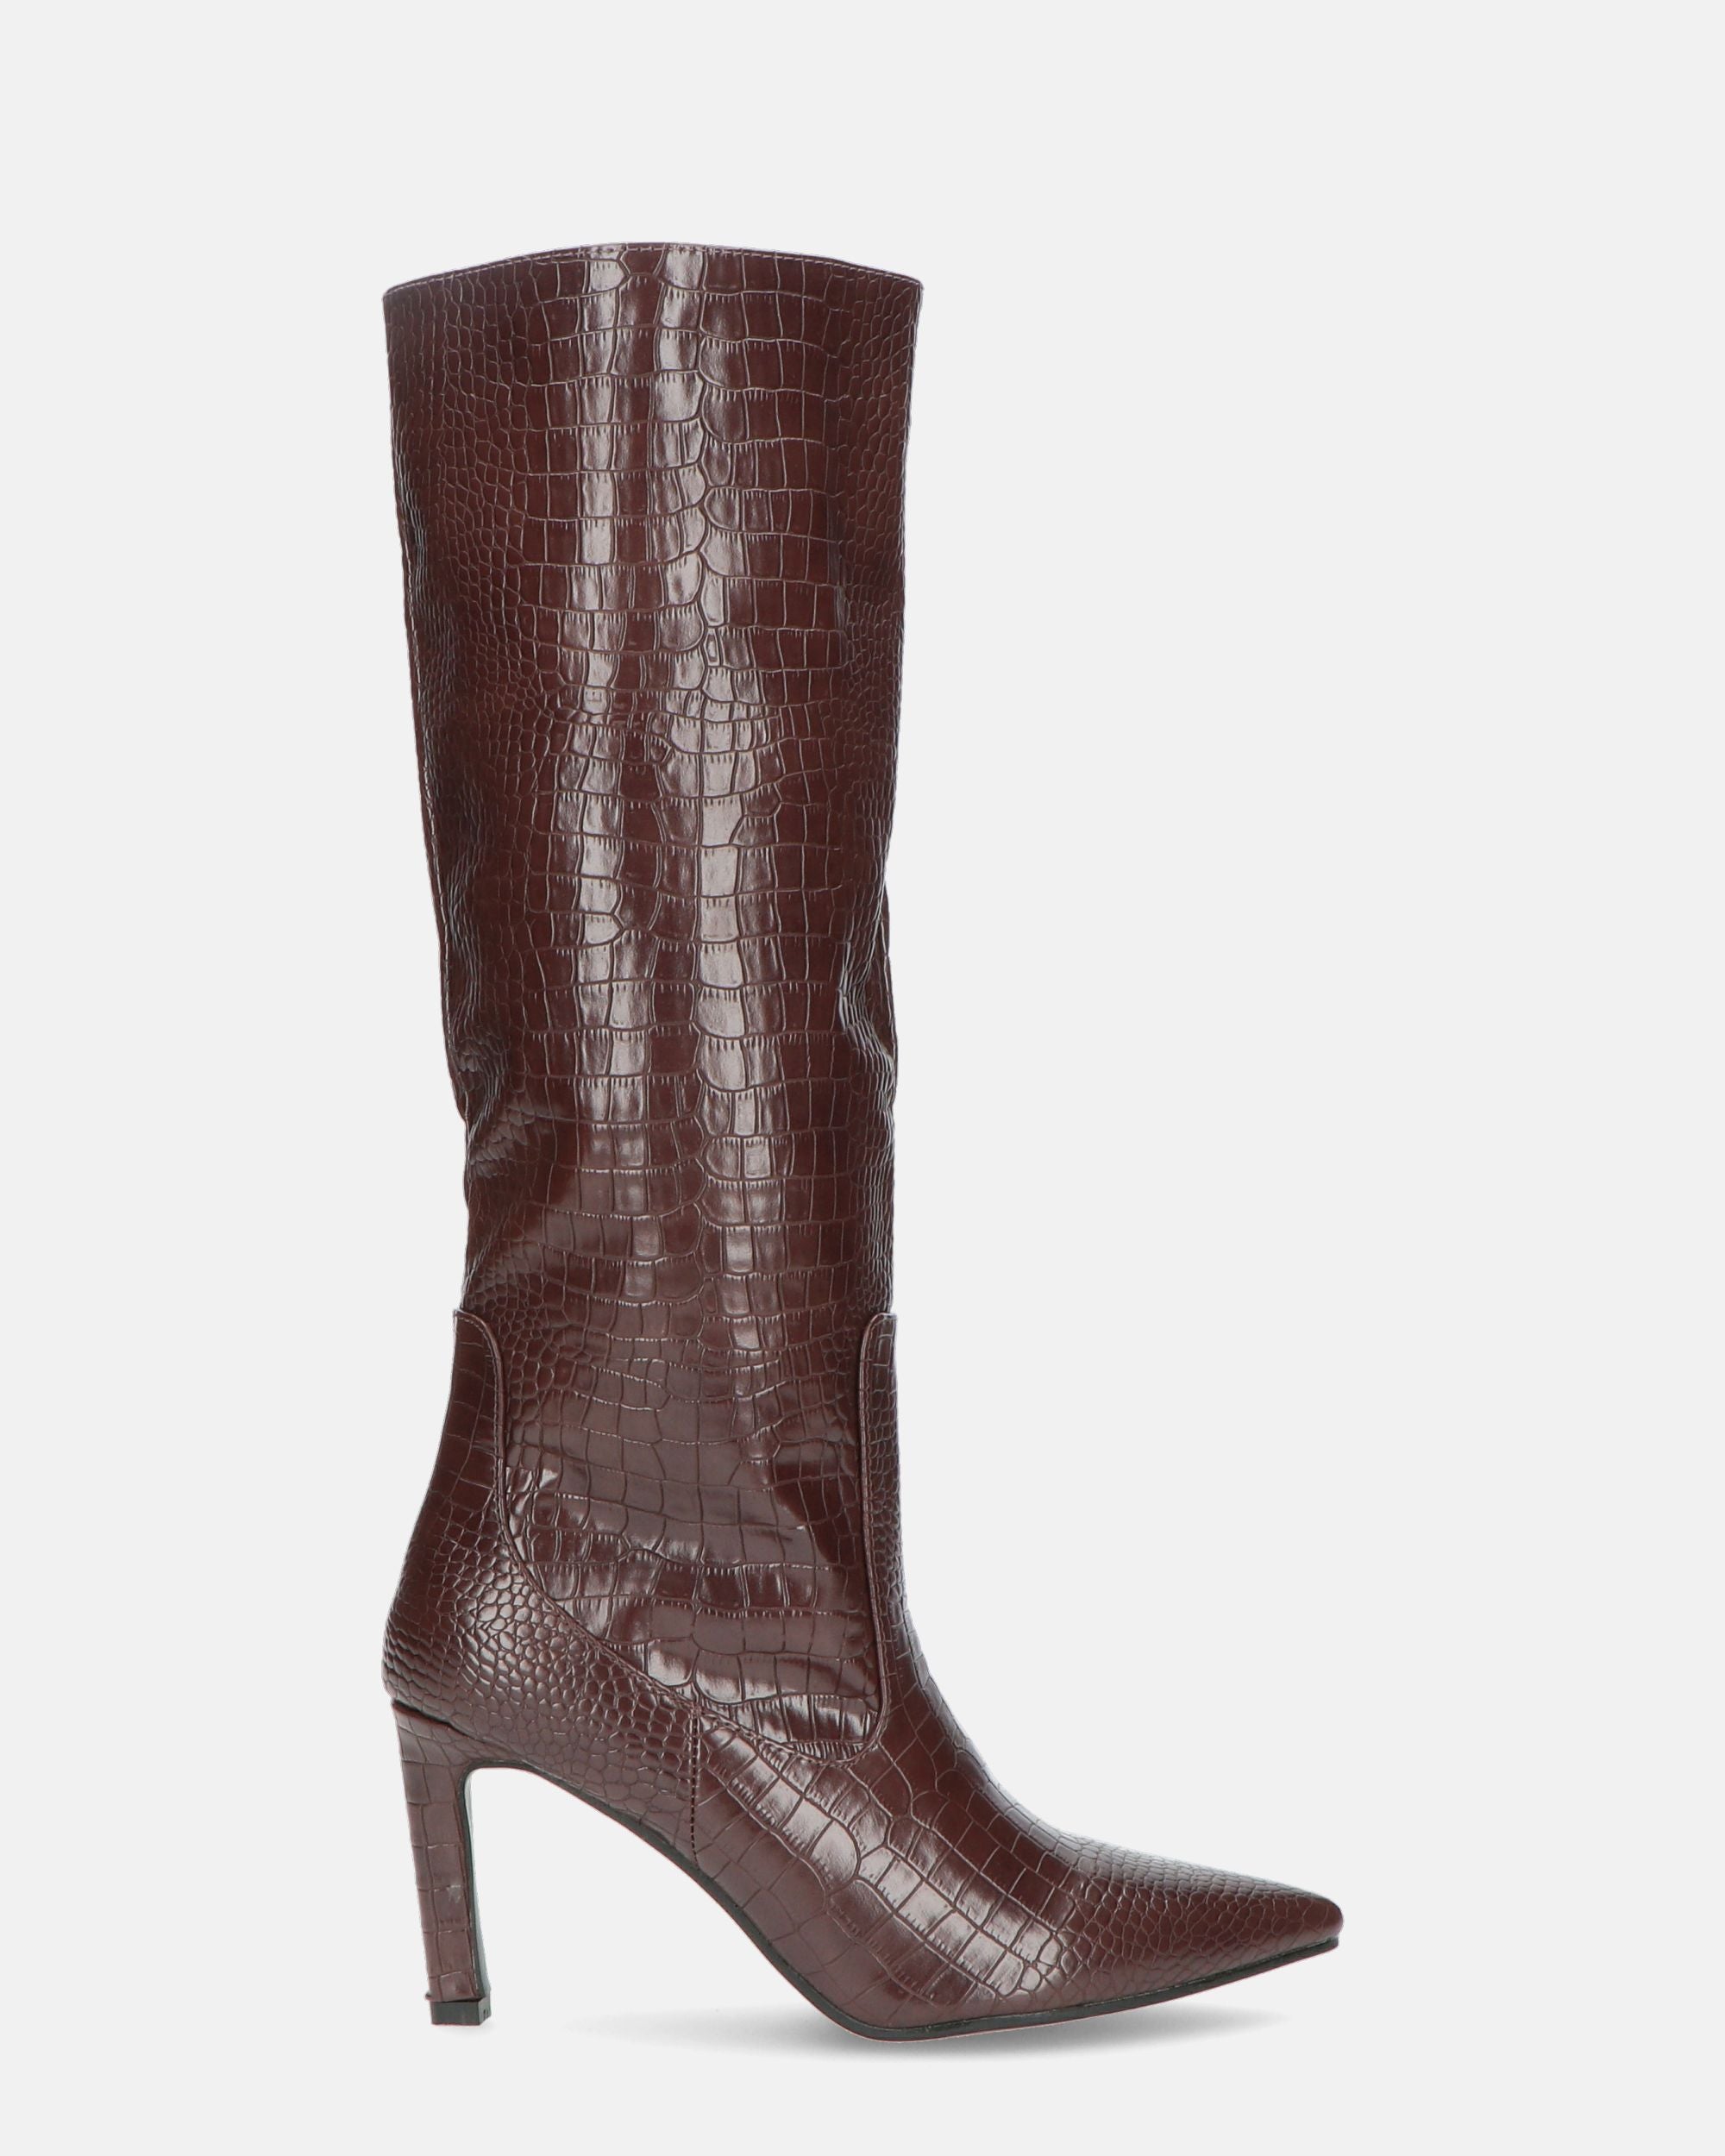 CAROLINE - high heeled boot in dark brown snake